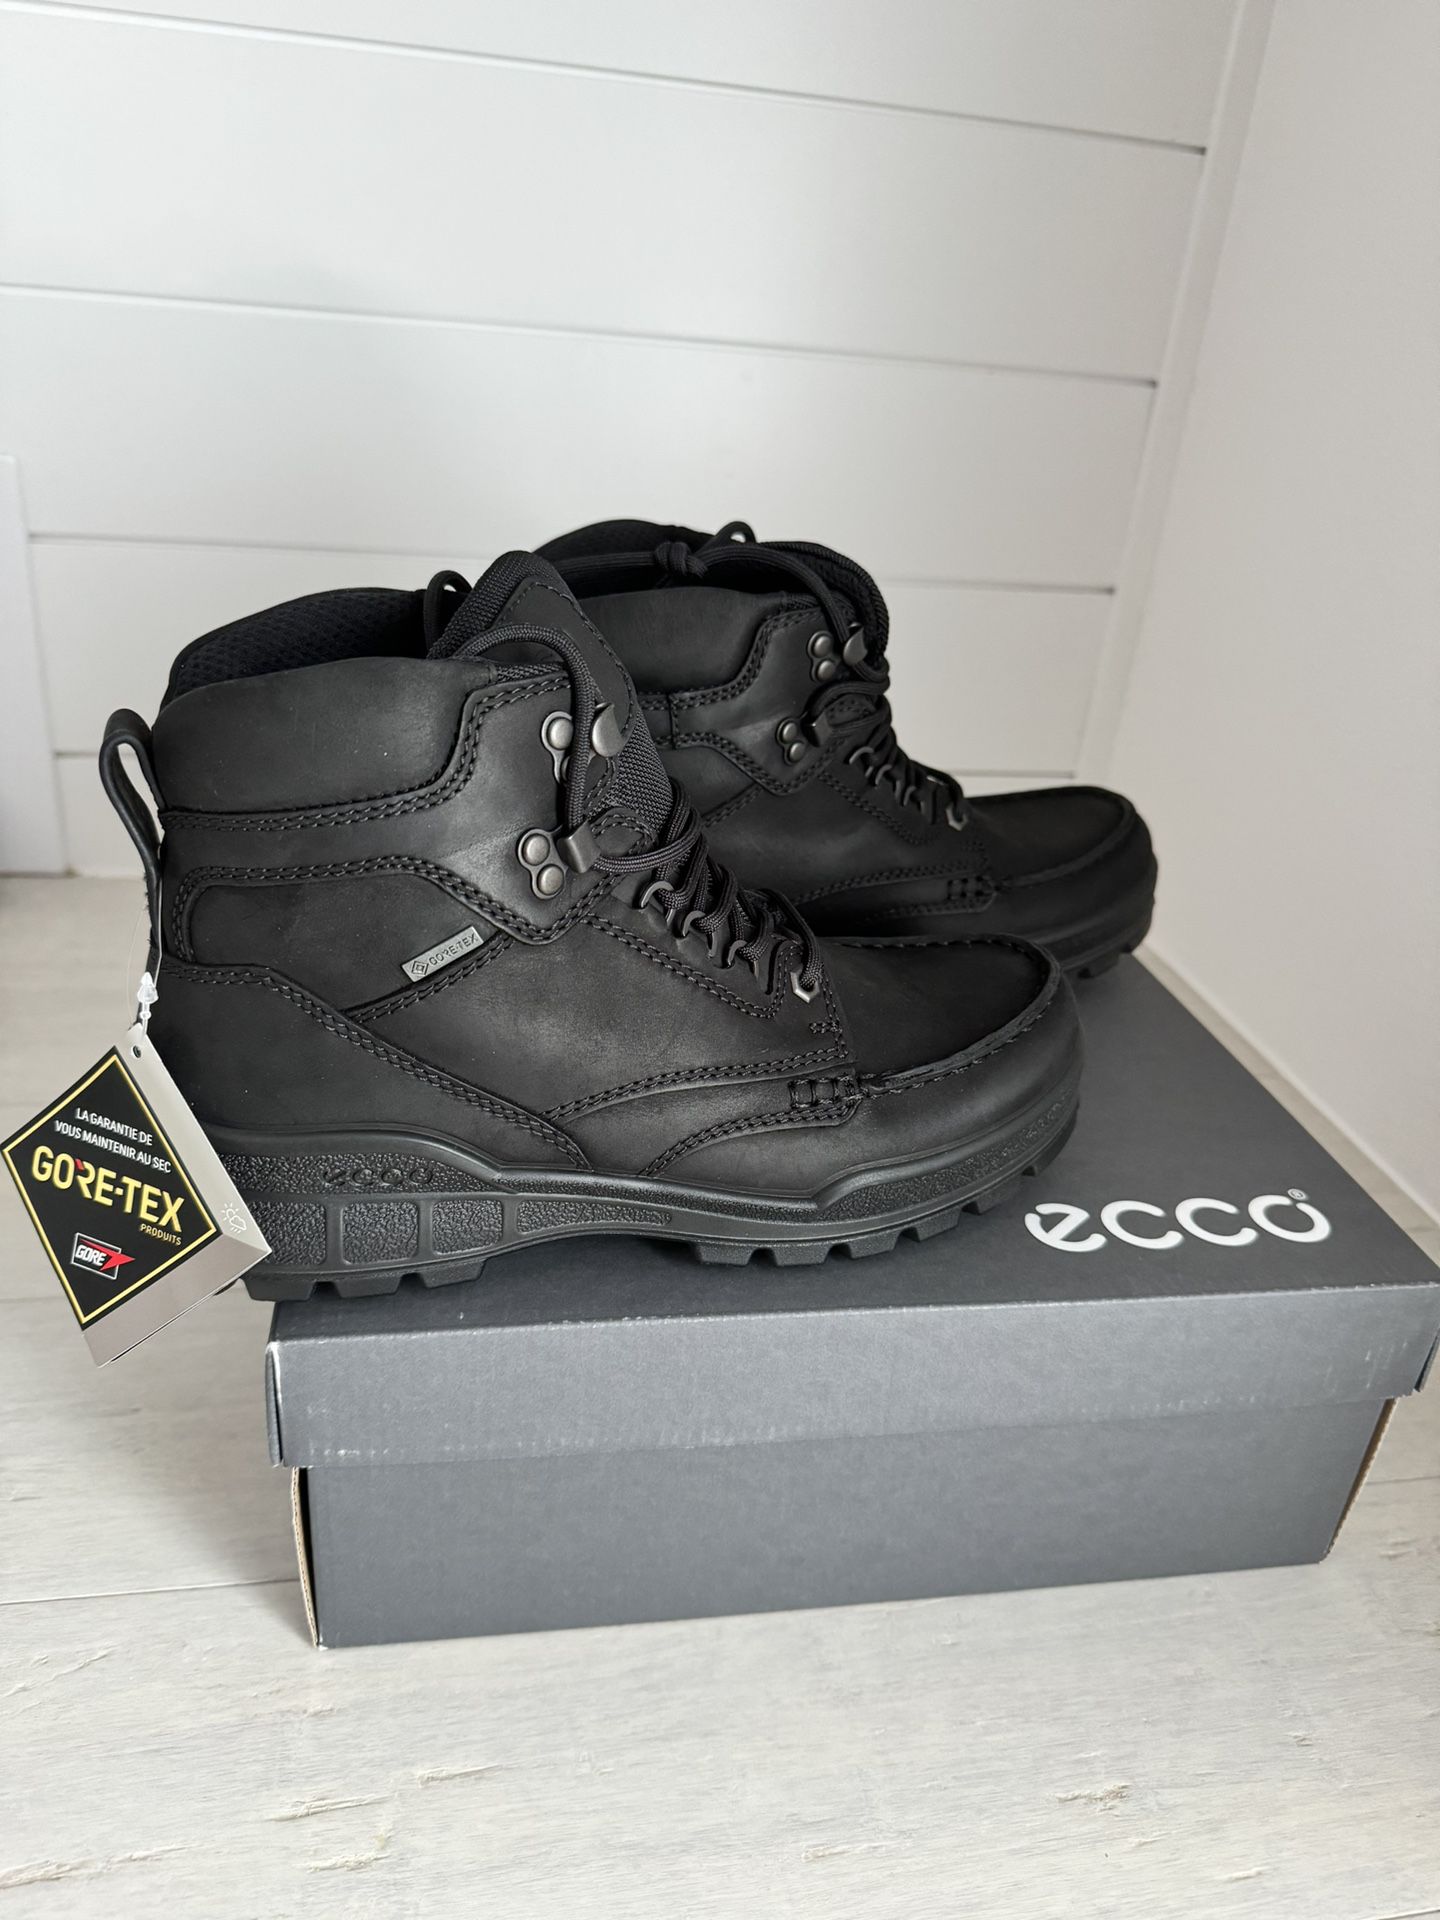 ECCO Women's High Boot Size 7-7.5